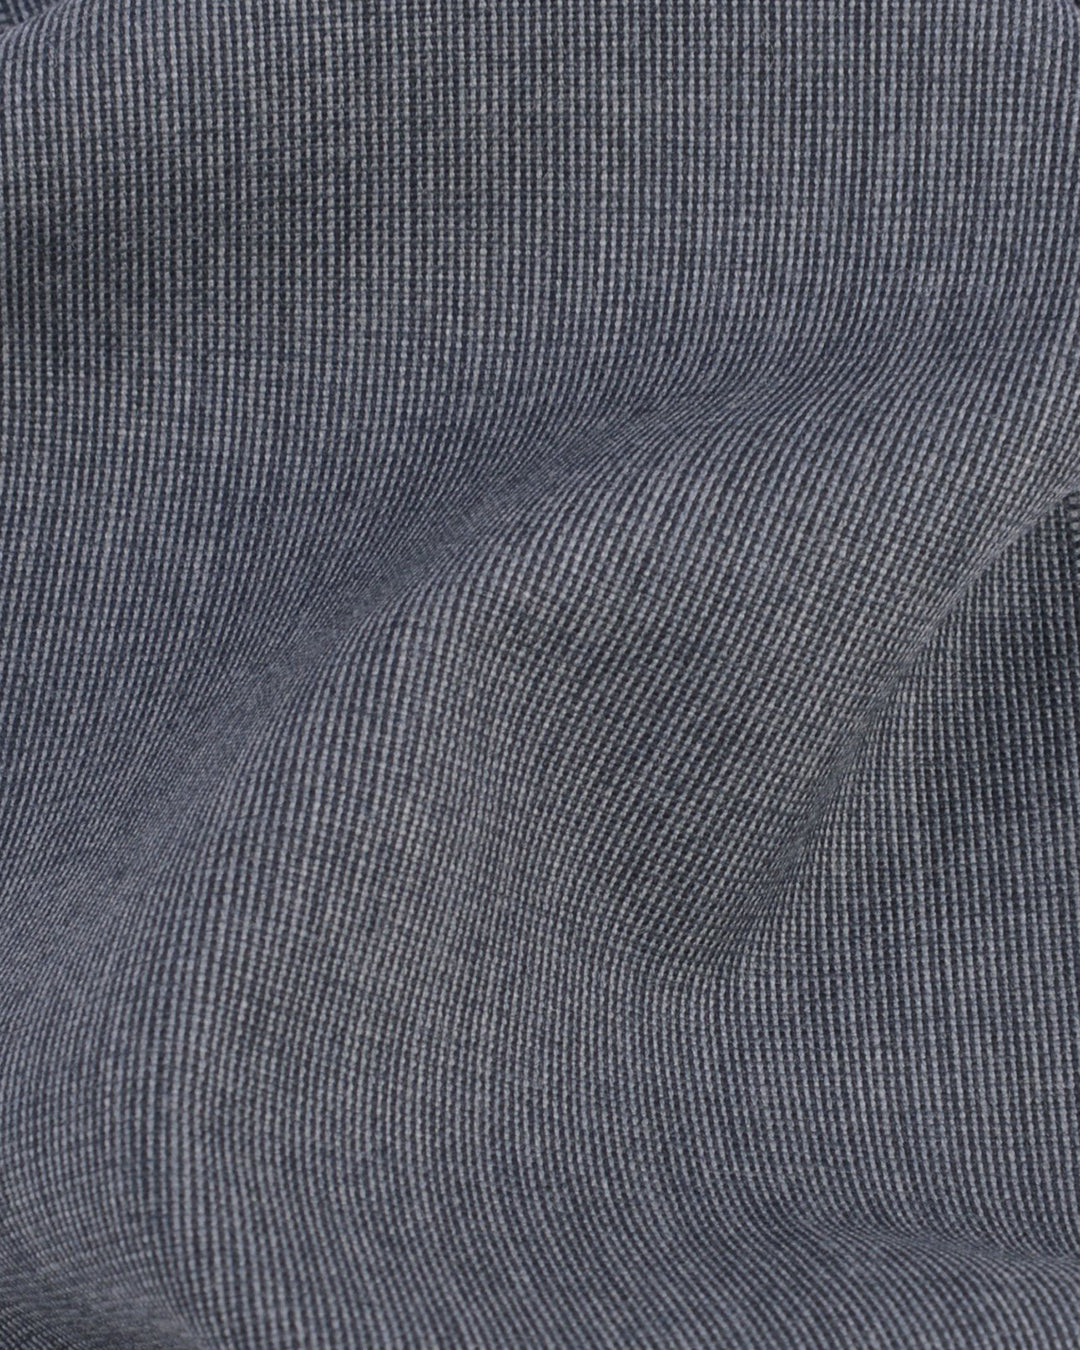 Dugdale Fine Worsted - Grey Textured Plain